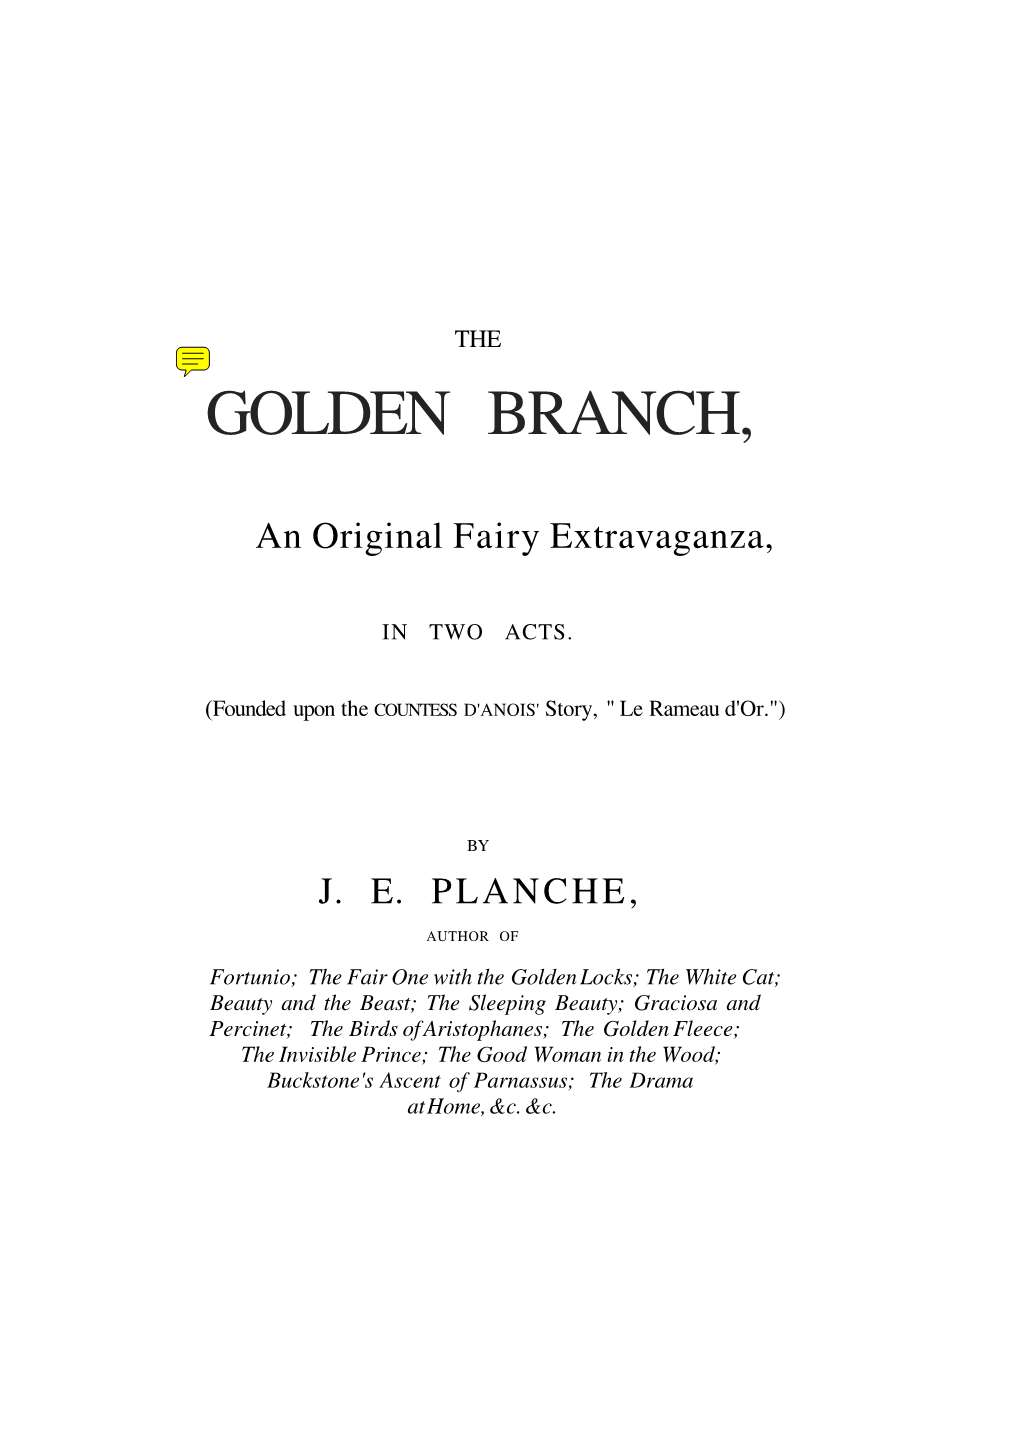 Golden Branch